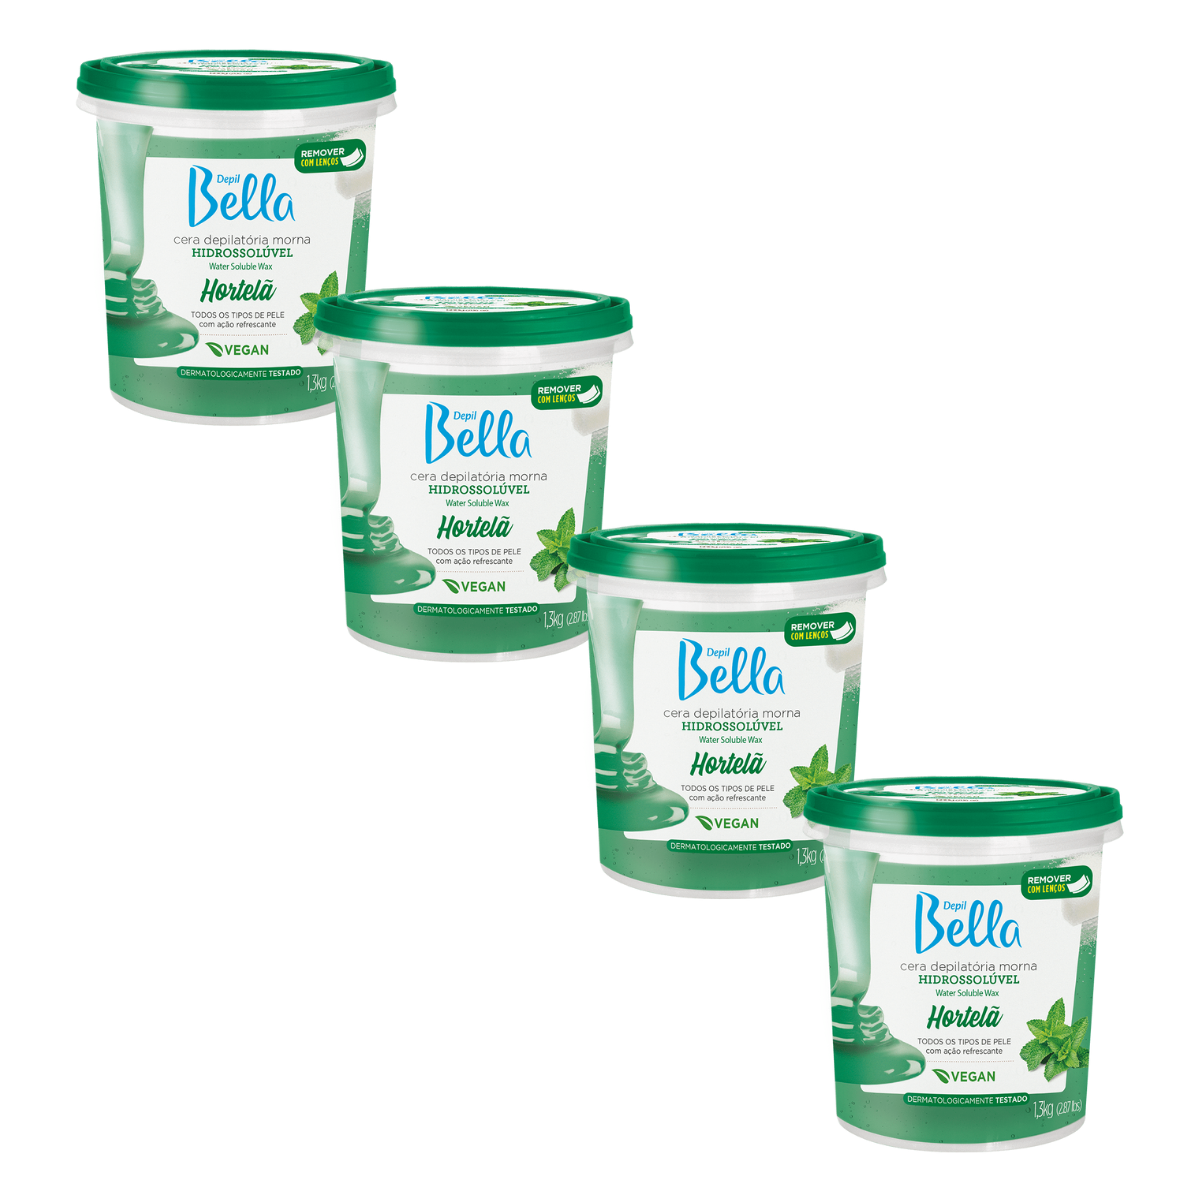 Depil Bella Full Body Sugar Wax Mint, Hair Remover 1300g (4 Units Offer) - depilcompany